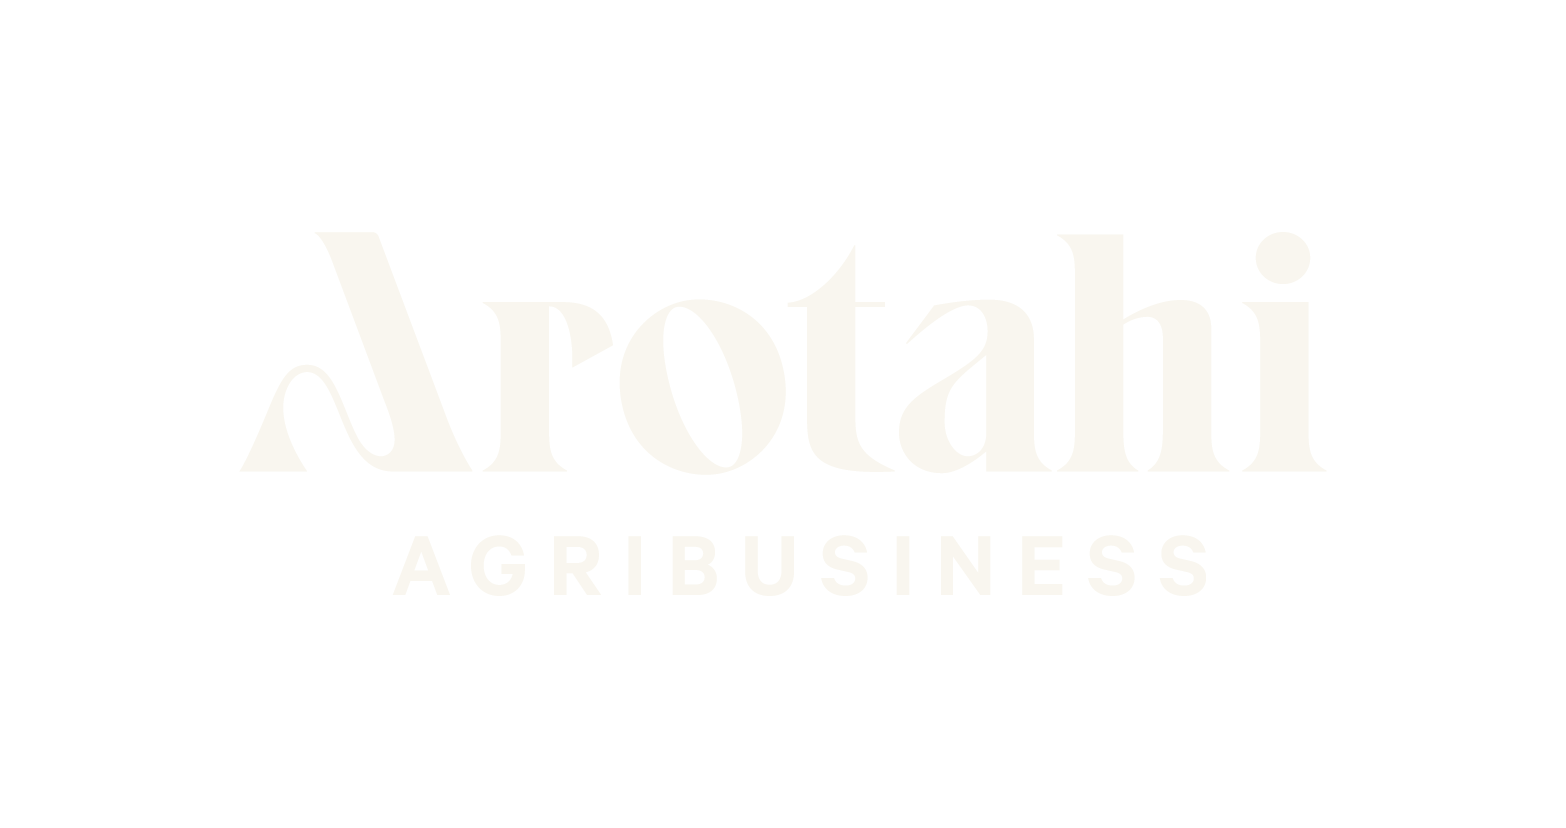 Arotahi Agri